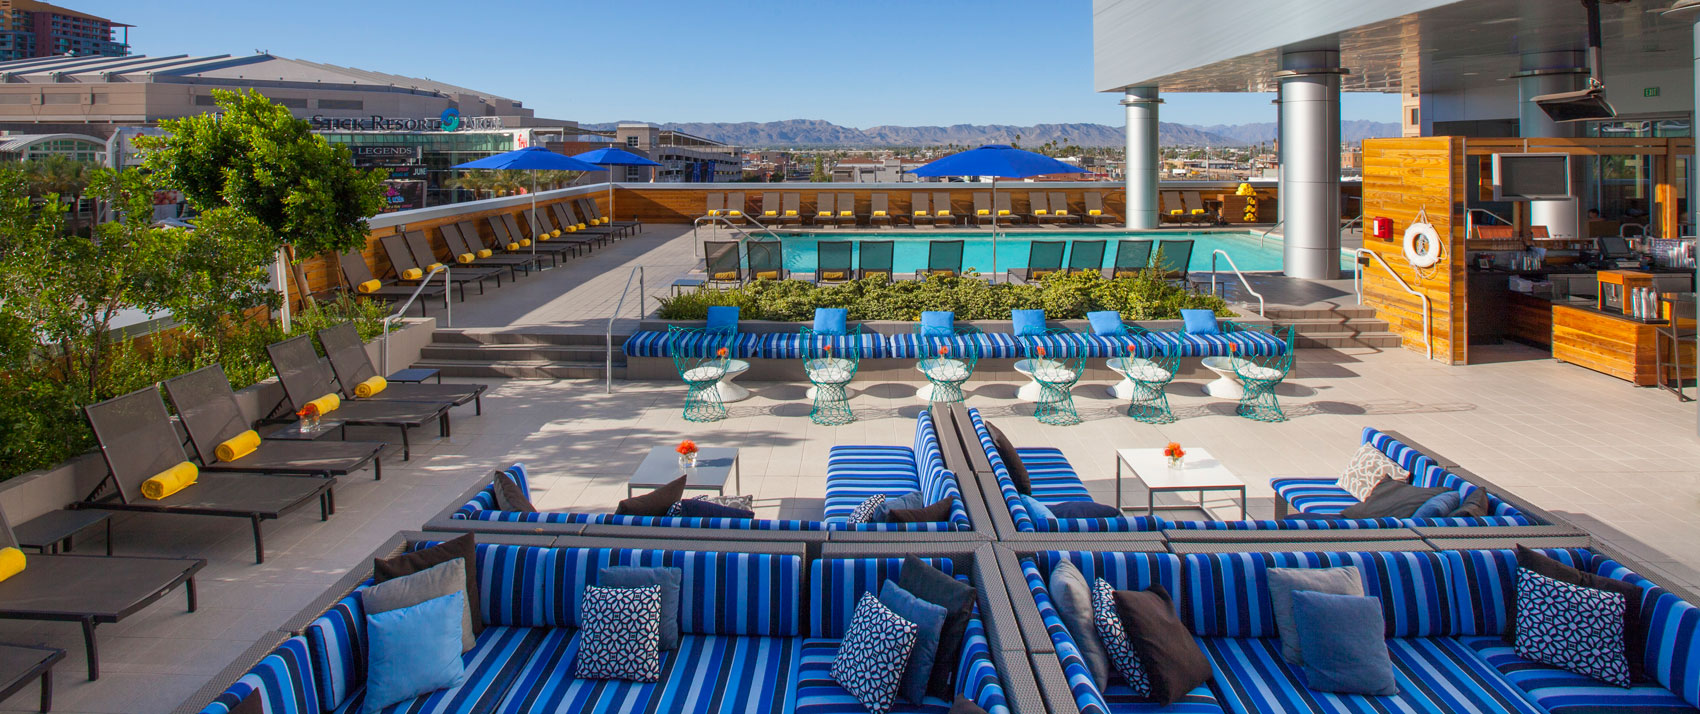 Kimpton Hotel Palomar Phoenix Rooftop pool and bar